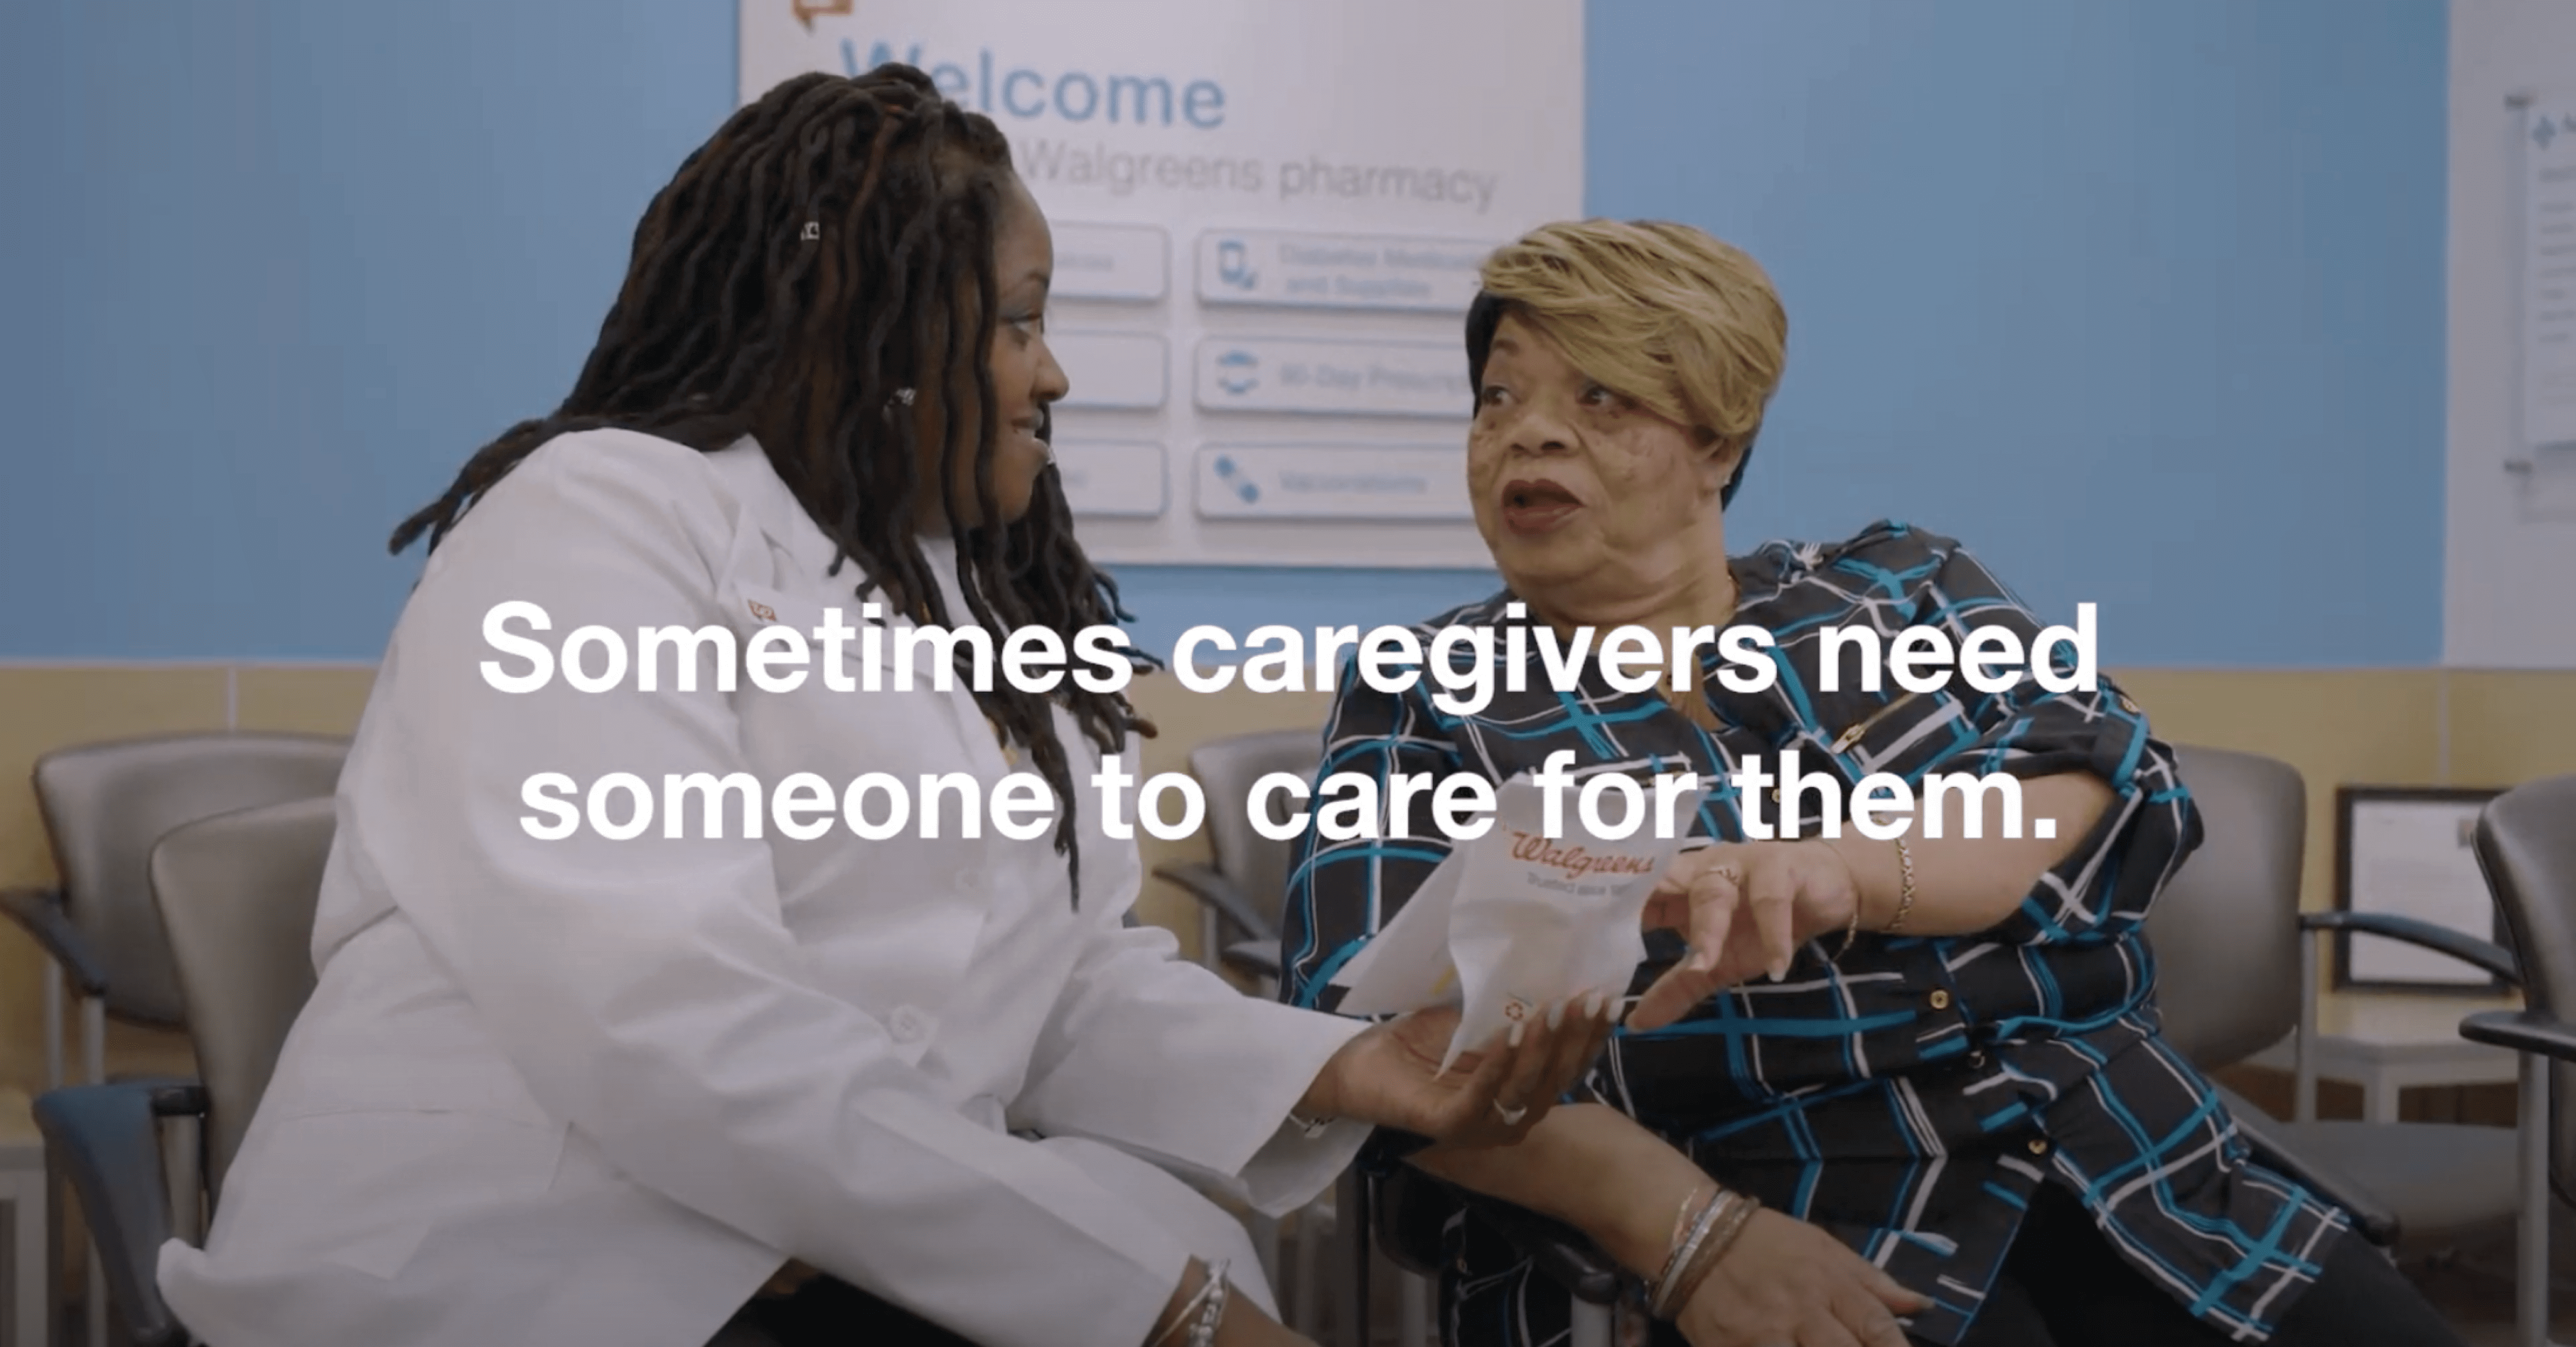 Video: Walgreens - Care in Her Corner